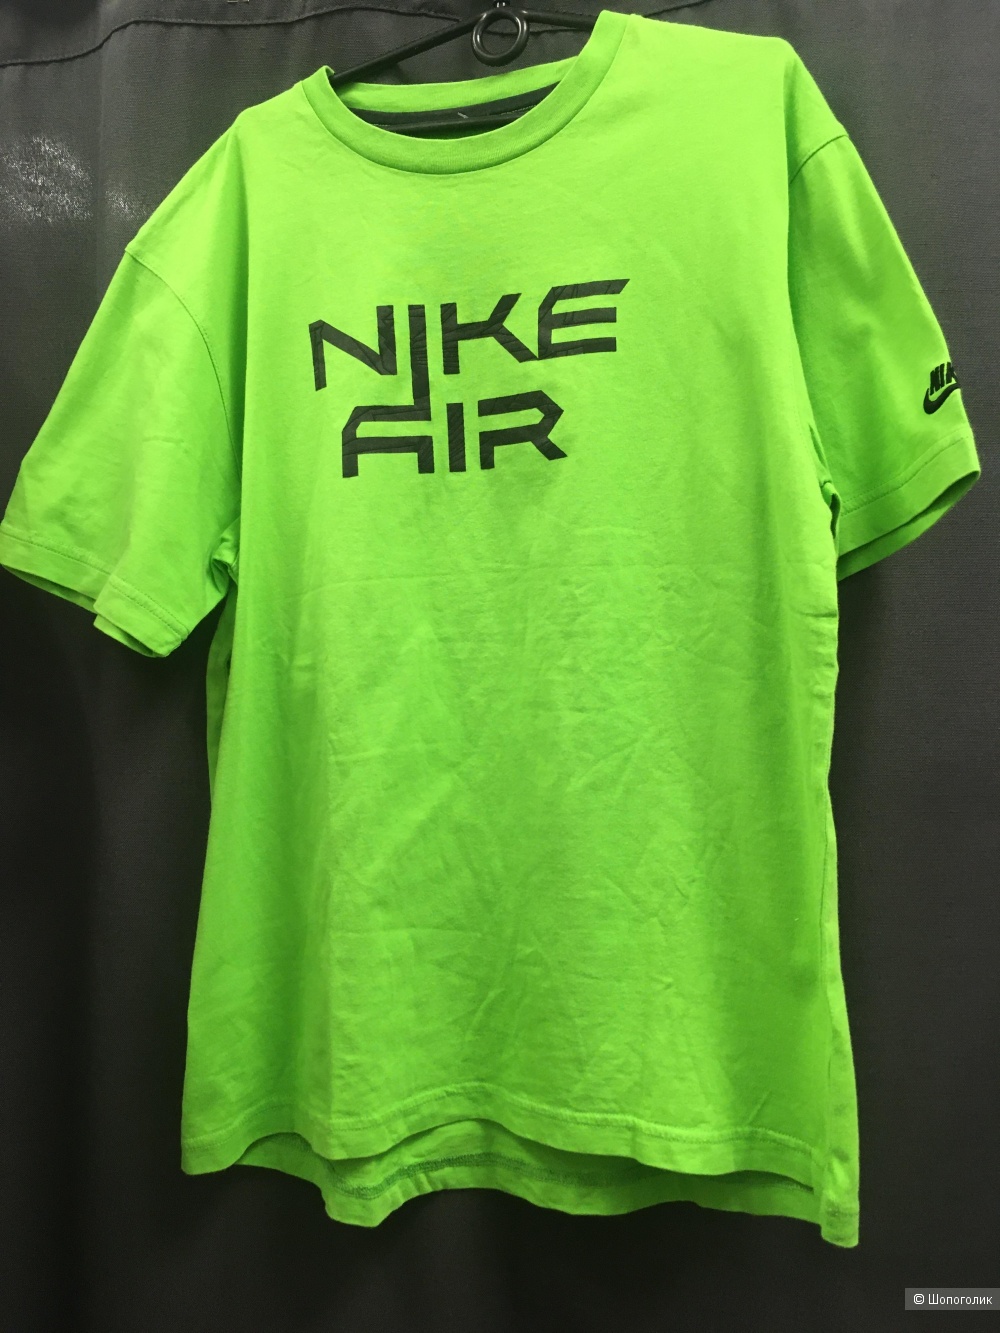 Футболка Nike Air размер S/M